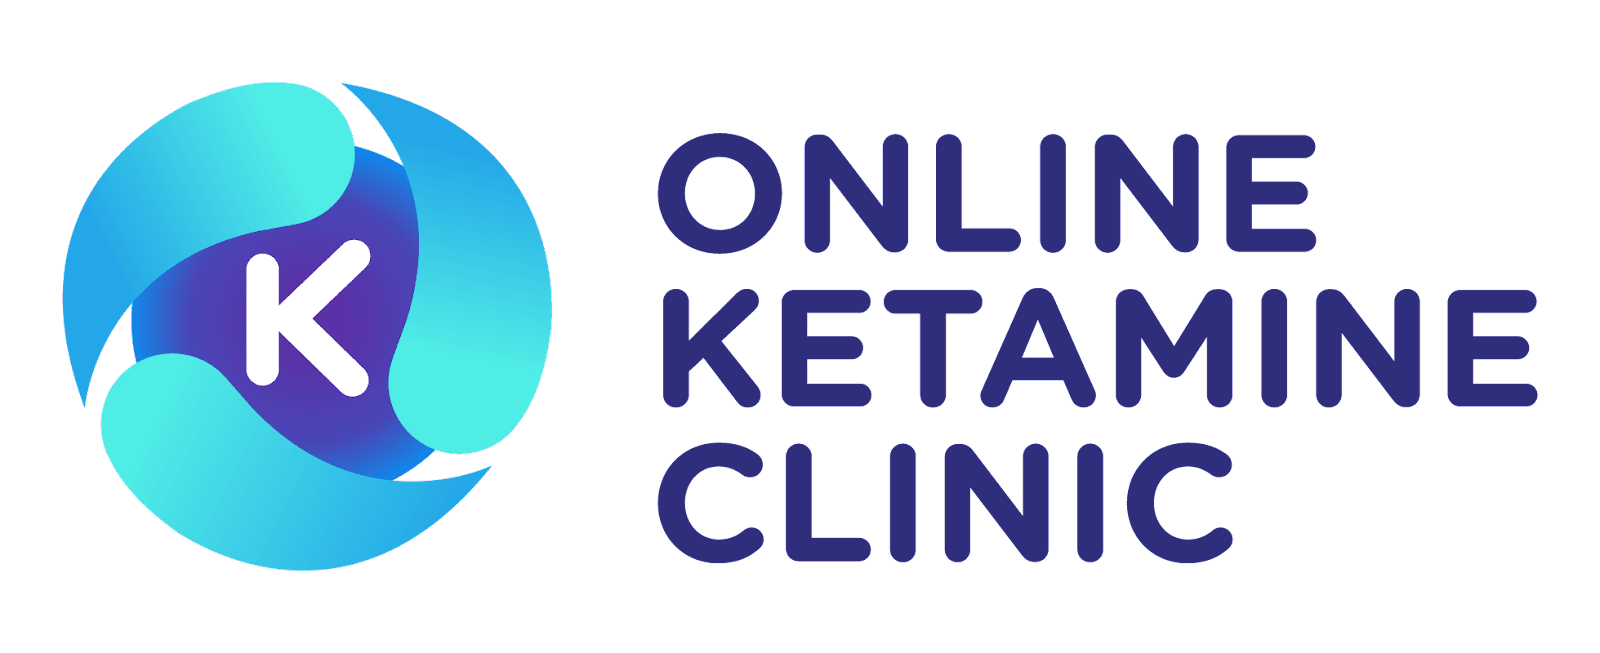 online ketamine clinic